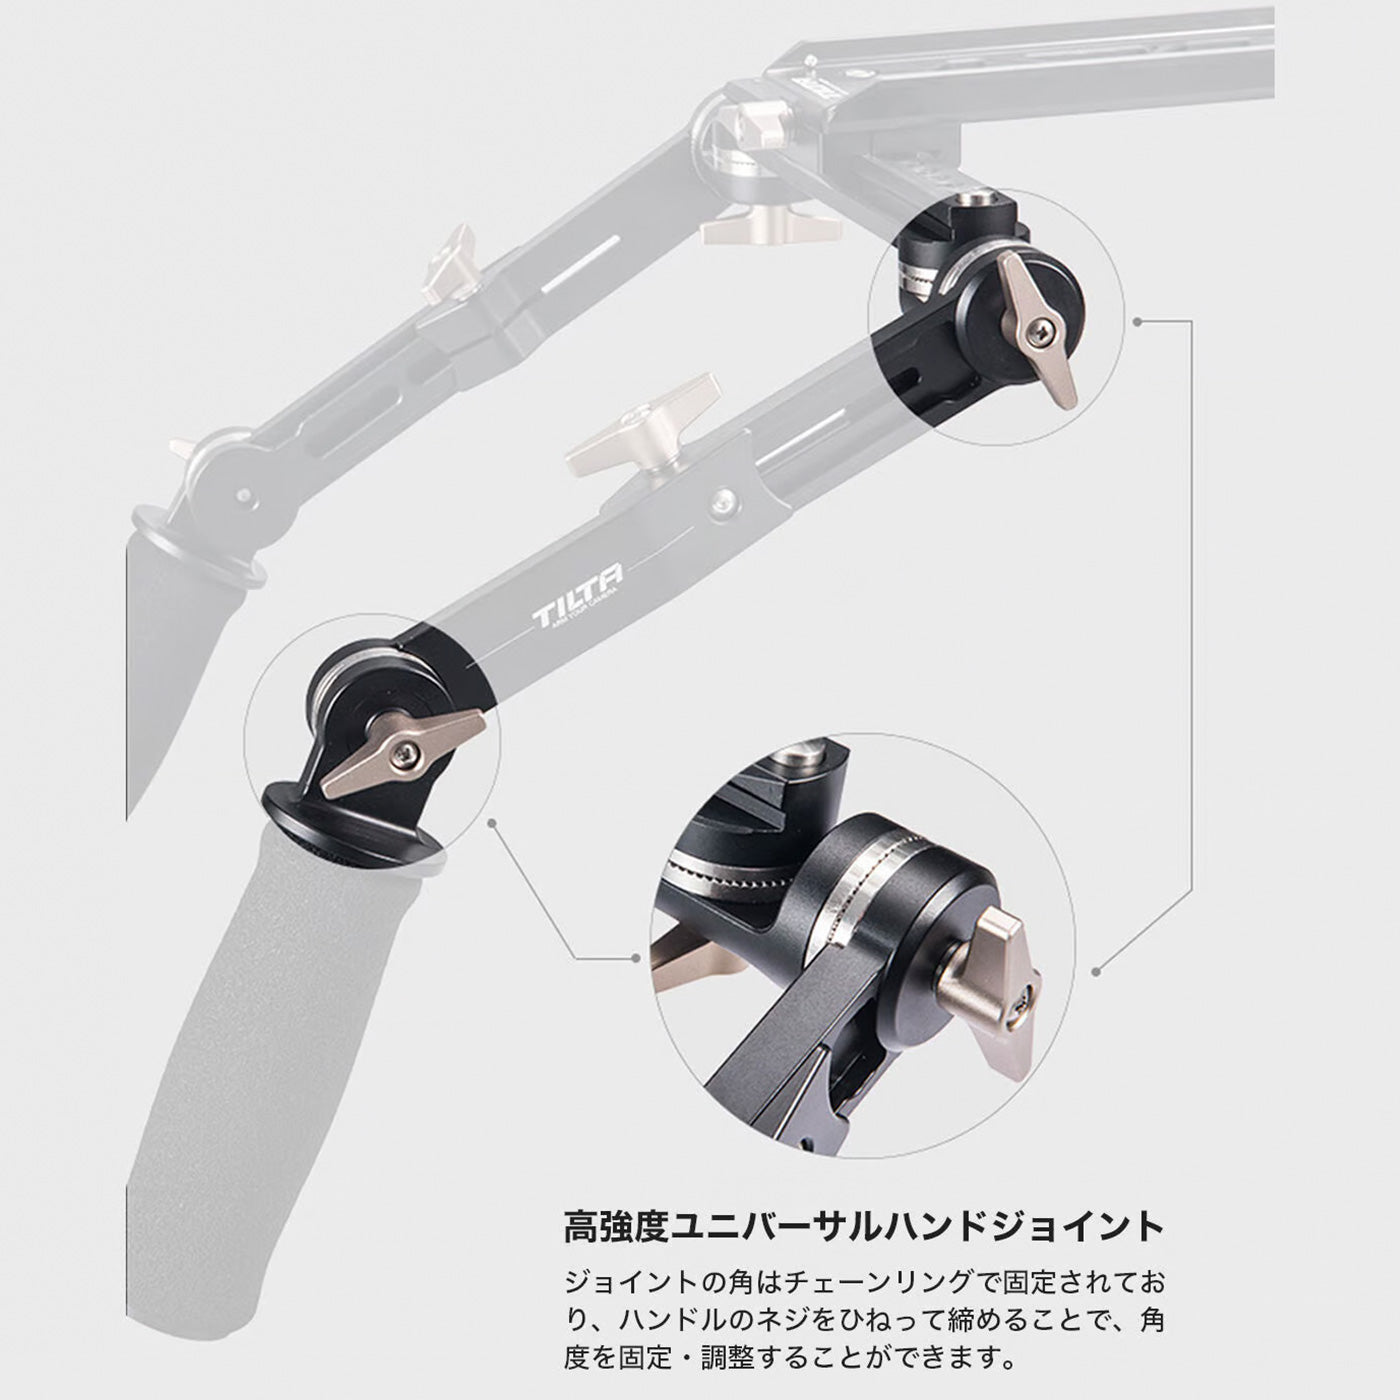 TILTA(ティルタ) 15mm Dovetail Shoulder Mount System ショルダーマウントシステム TT-0506-A15